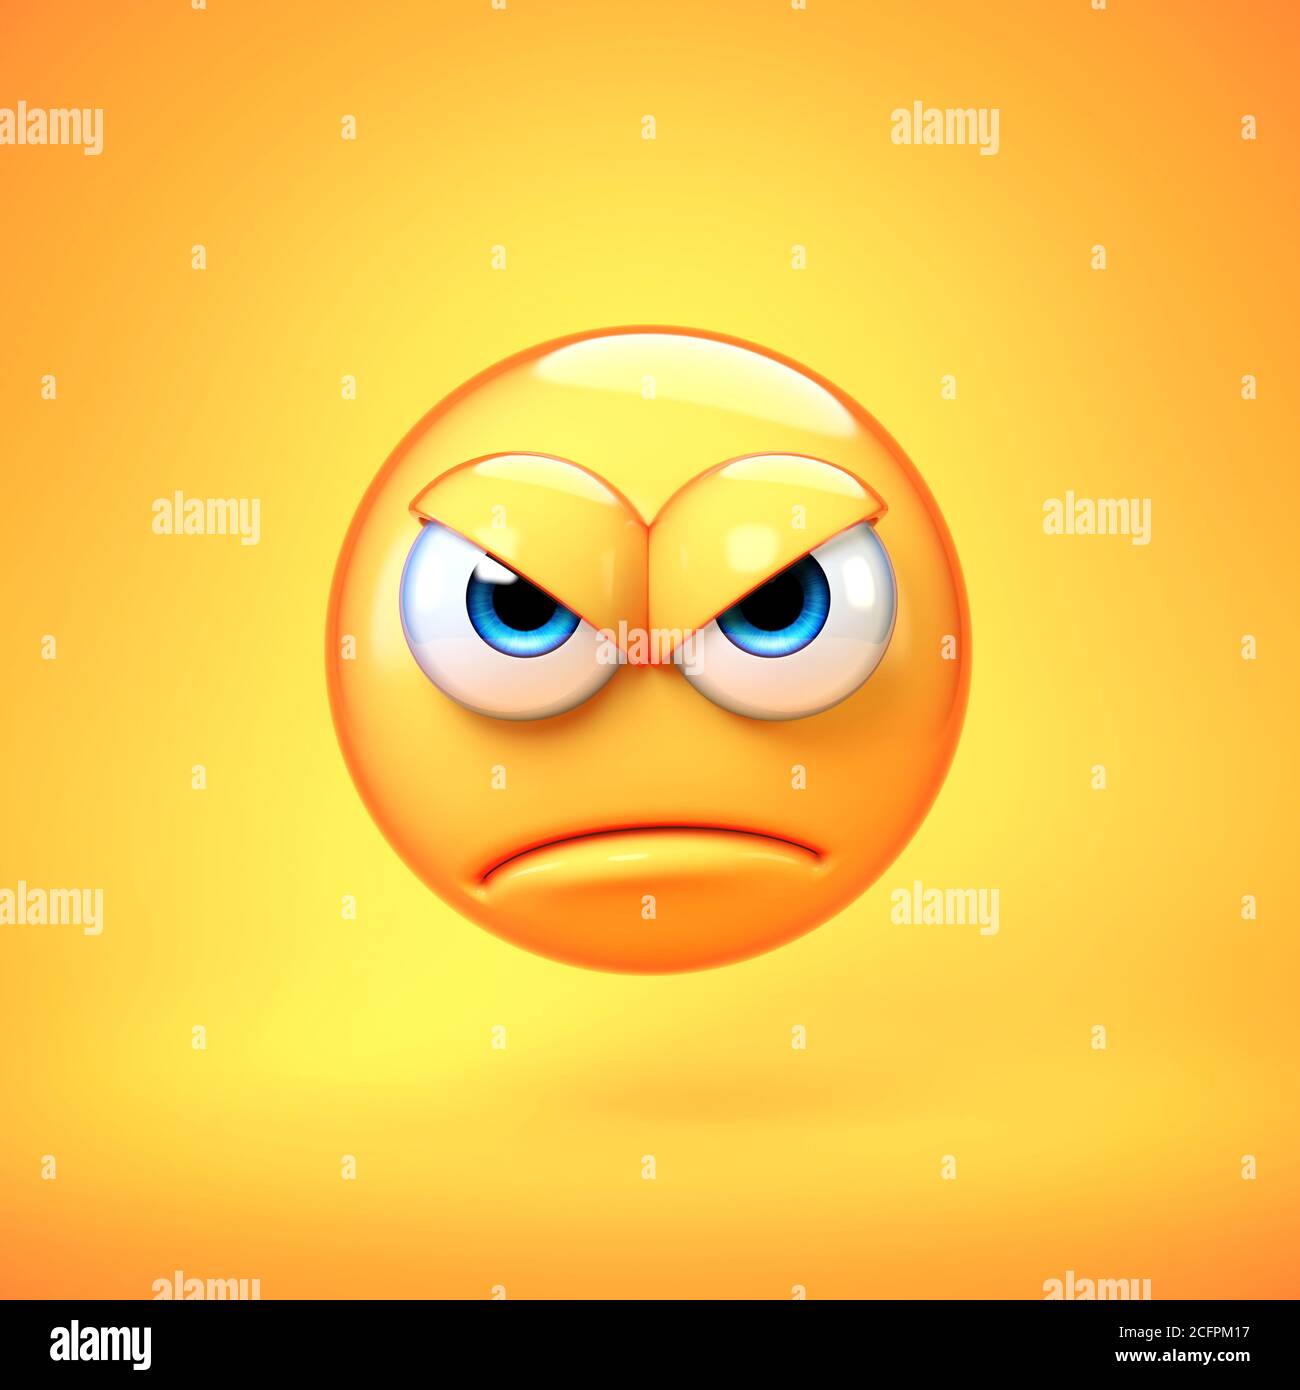 Bad emoji isolated on yellow background, upset emoticon 3d rendering Stock Photo